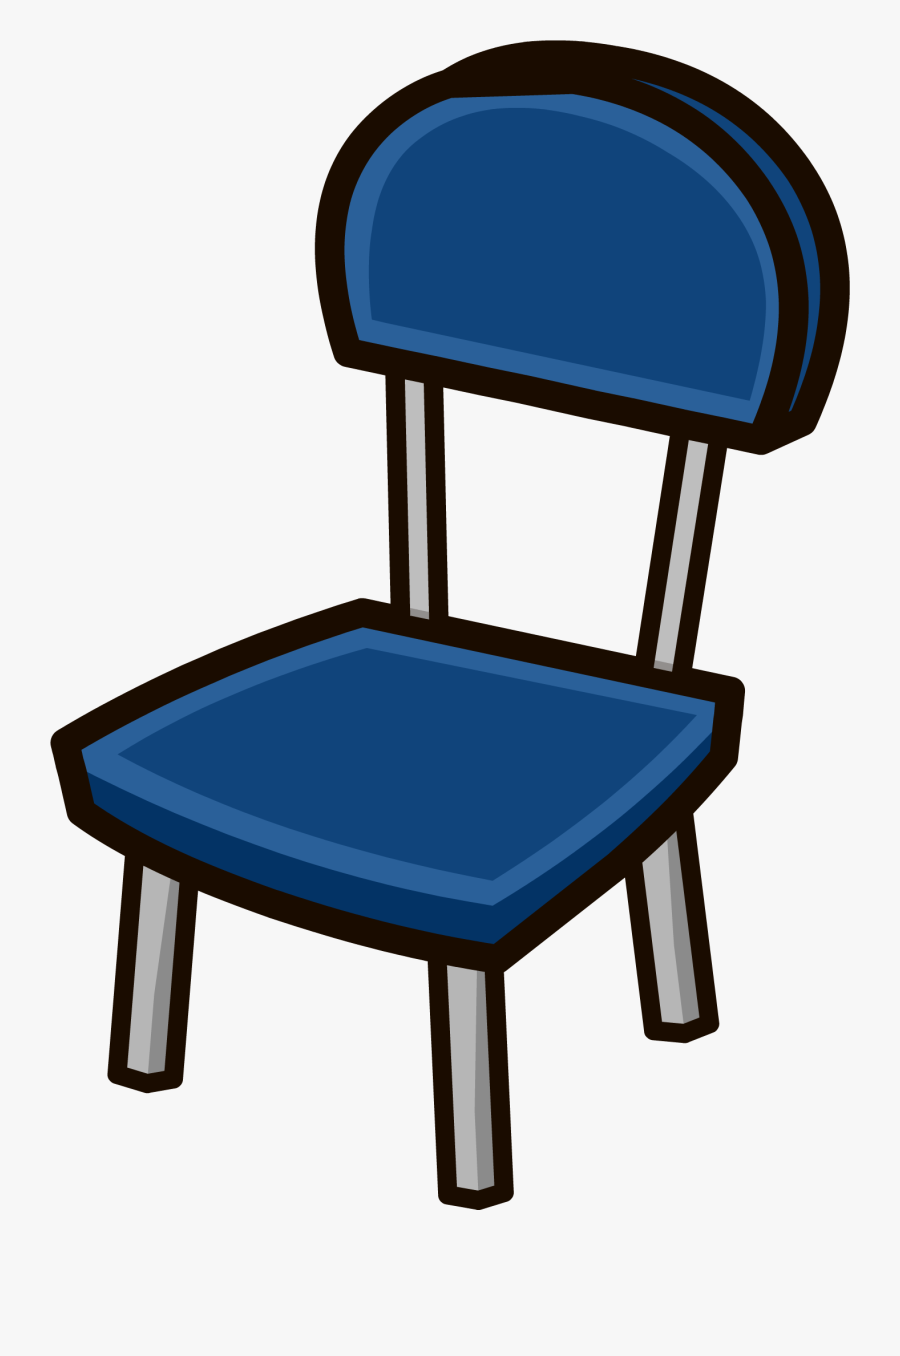 Chair Clipart Blue Chair - Chair Clipart Png, Transparent Clipart